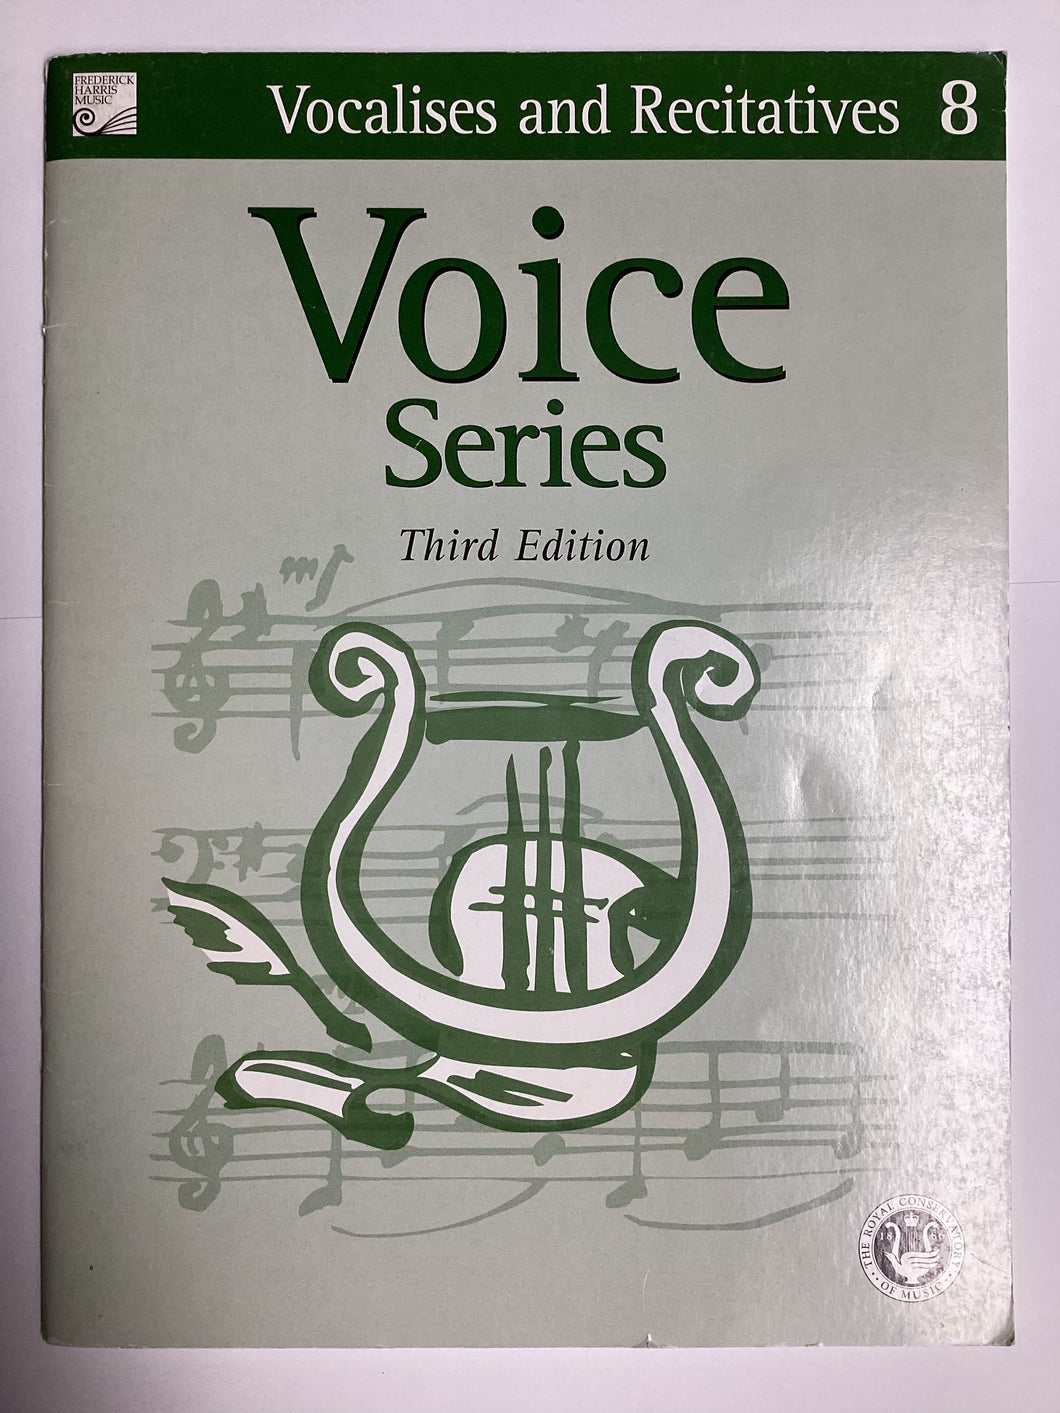 RCM Voice Series Third Edition - Vocalises and Recitatives 8